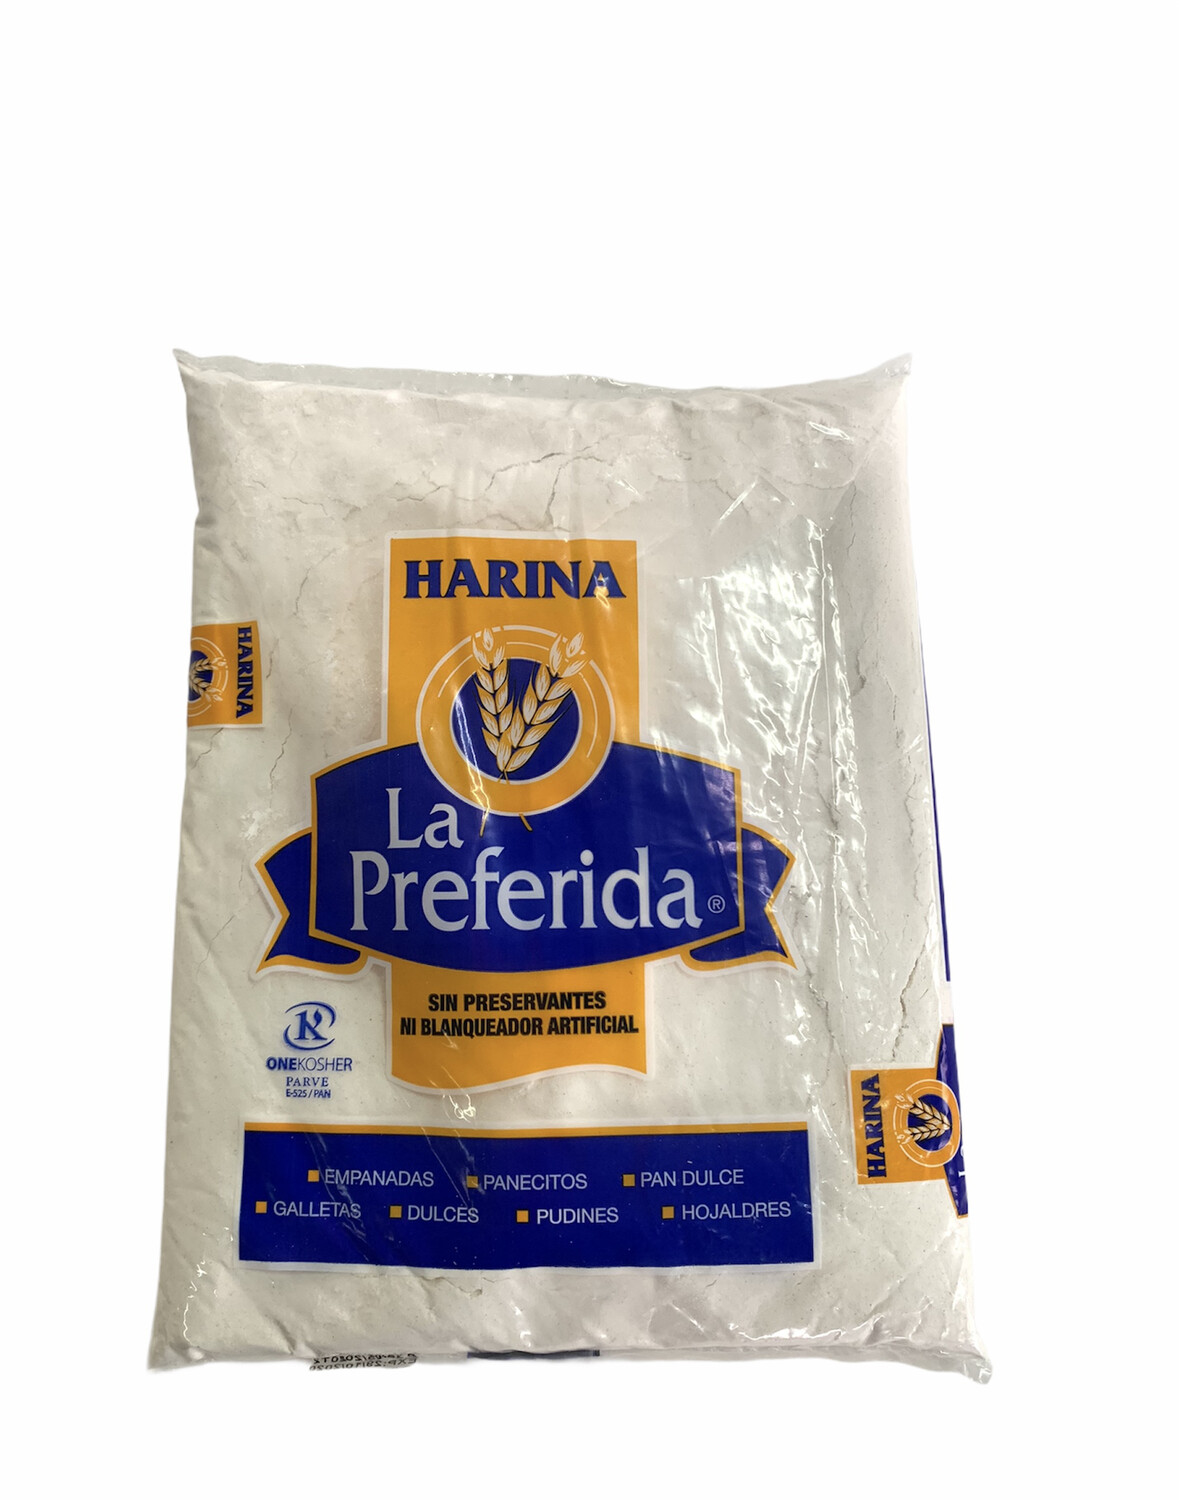 HARINA LA PREFERIDA 396g